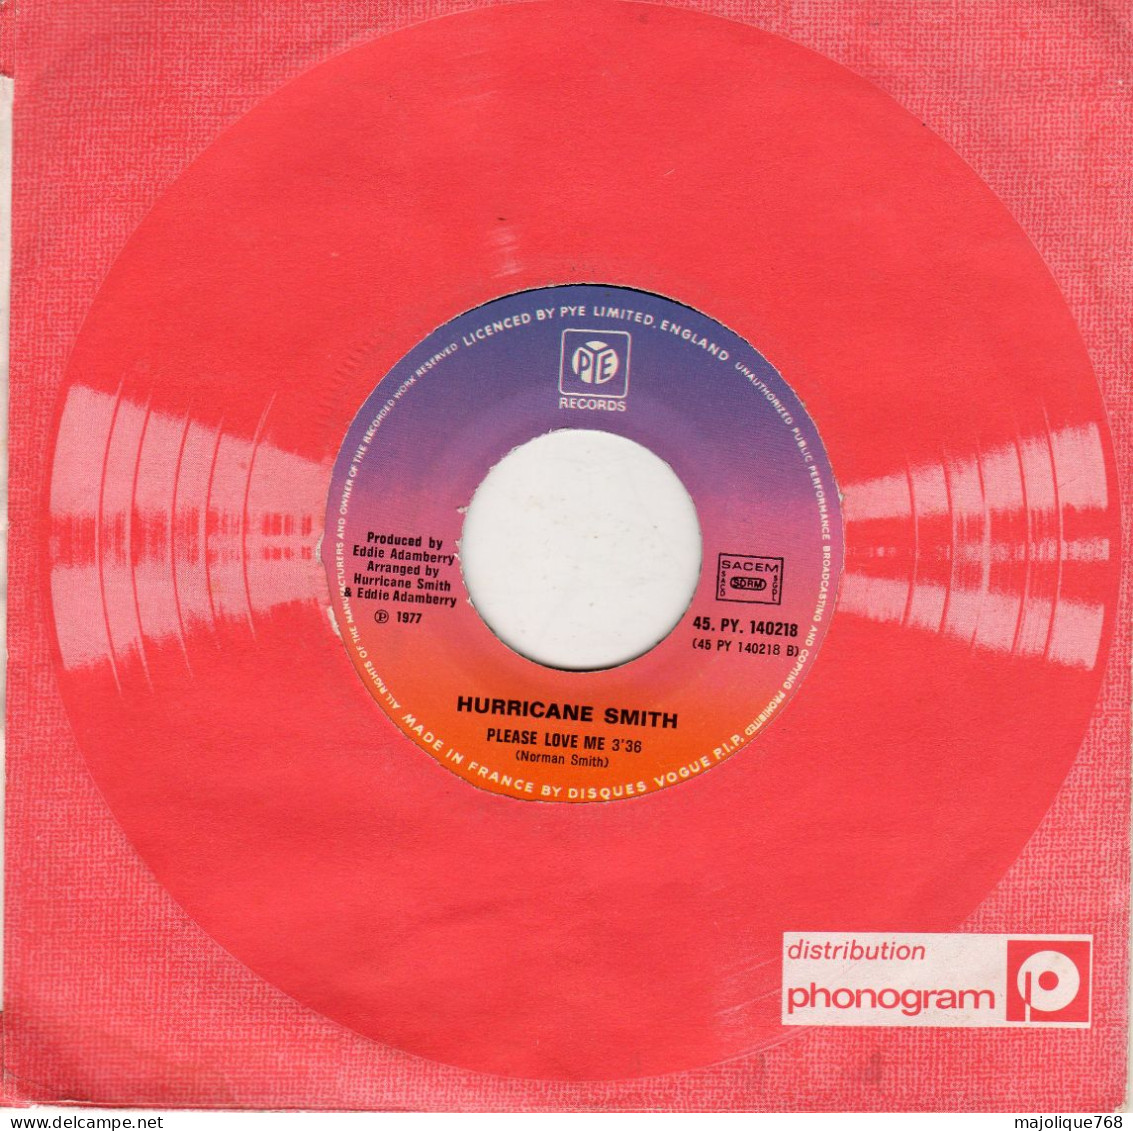 Disque De Hurricane Smith - A Melody You Never Wil Forget - PYE Records 140218 - France 1977 - Disco & Pop